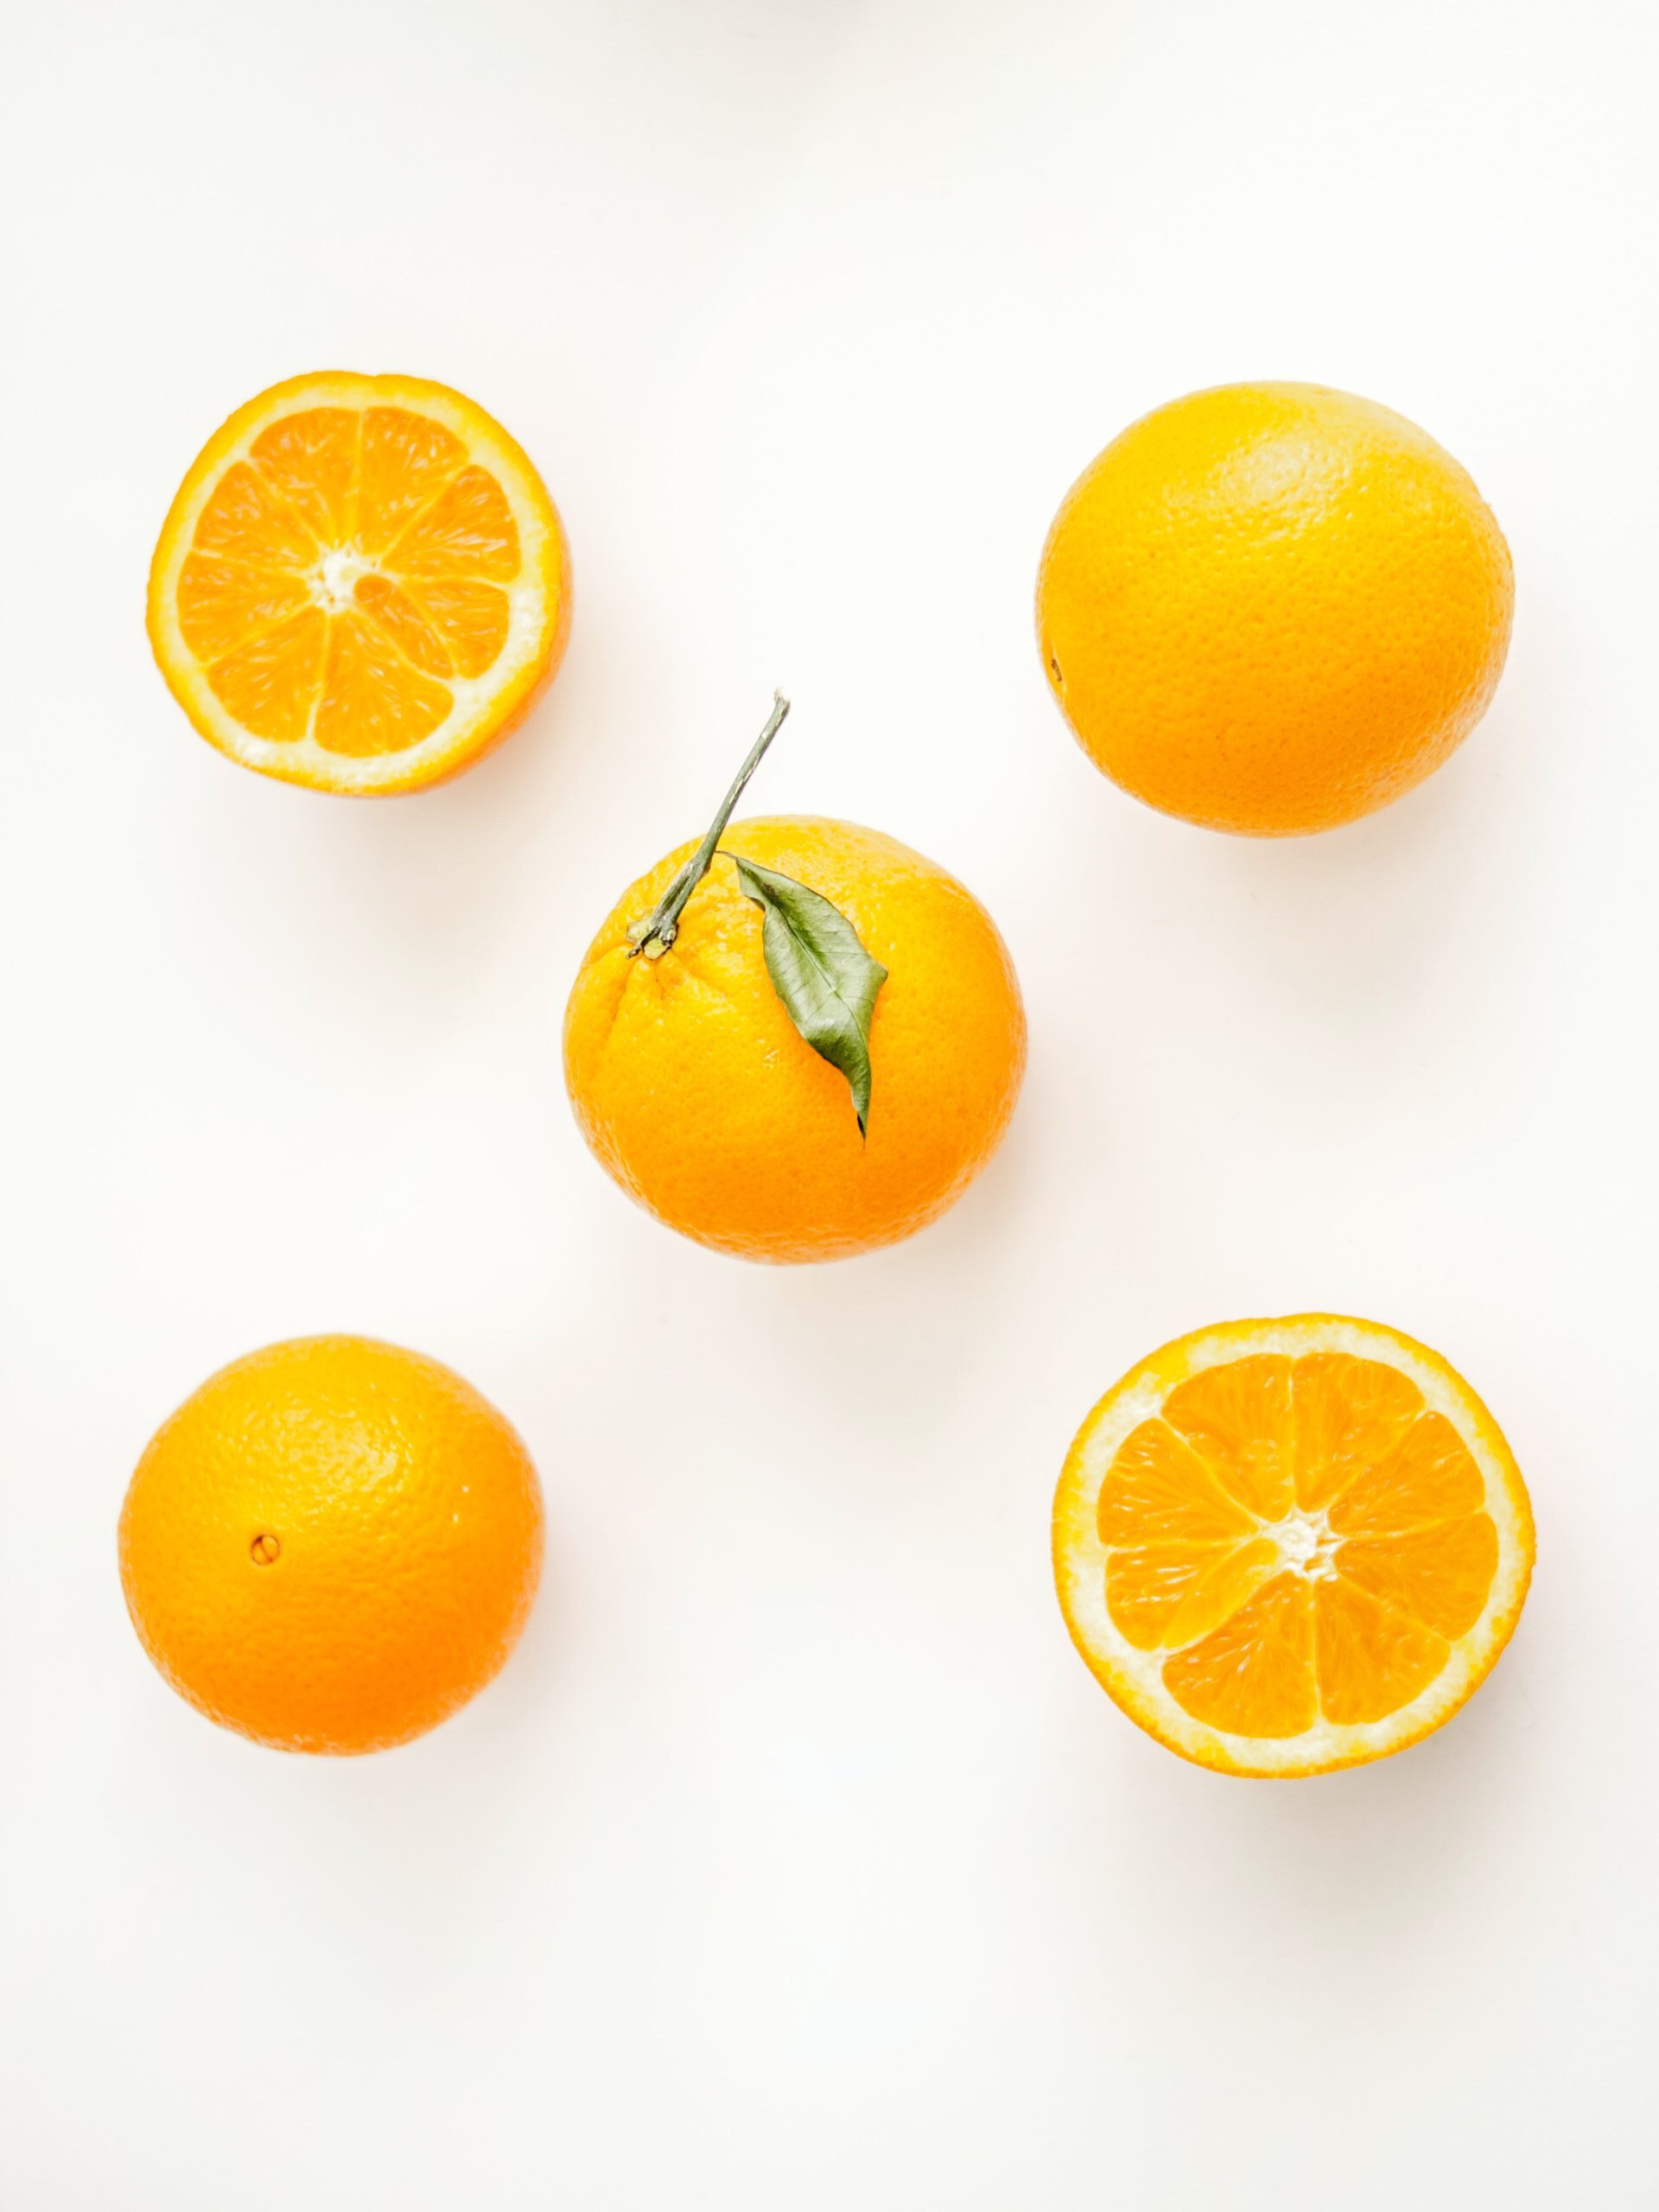 Oranges: How To Get Your Fresh Oranges to Last Longer